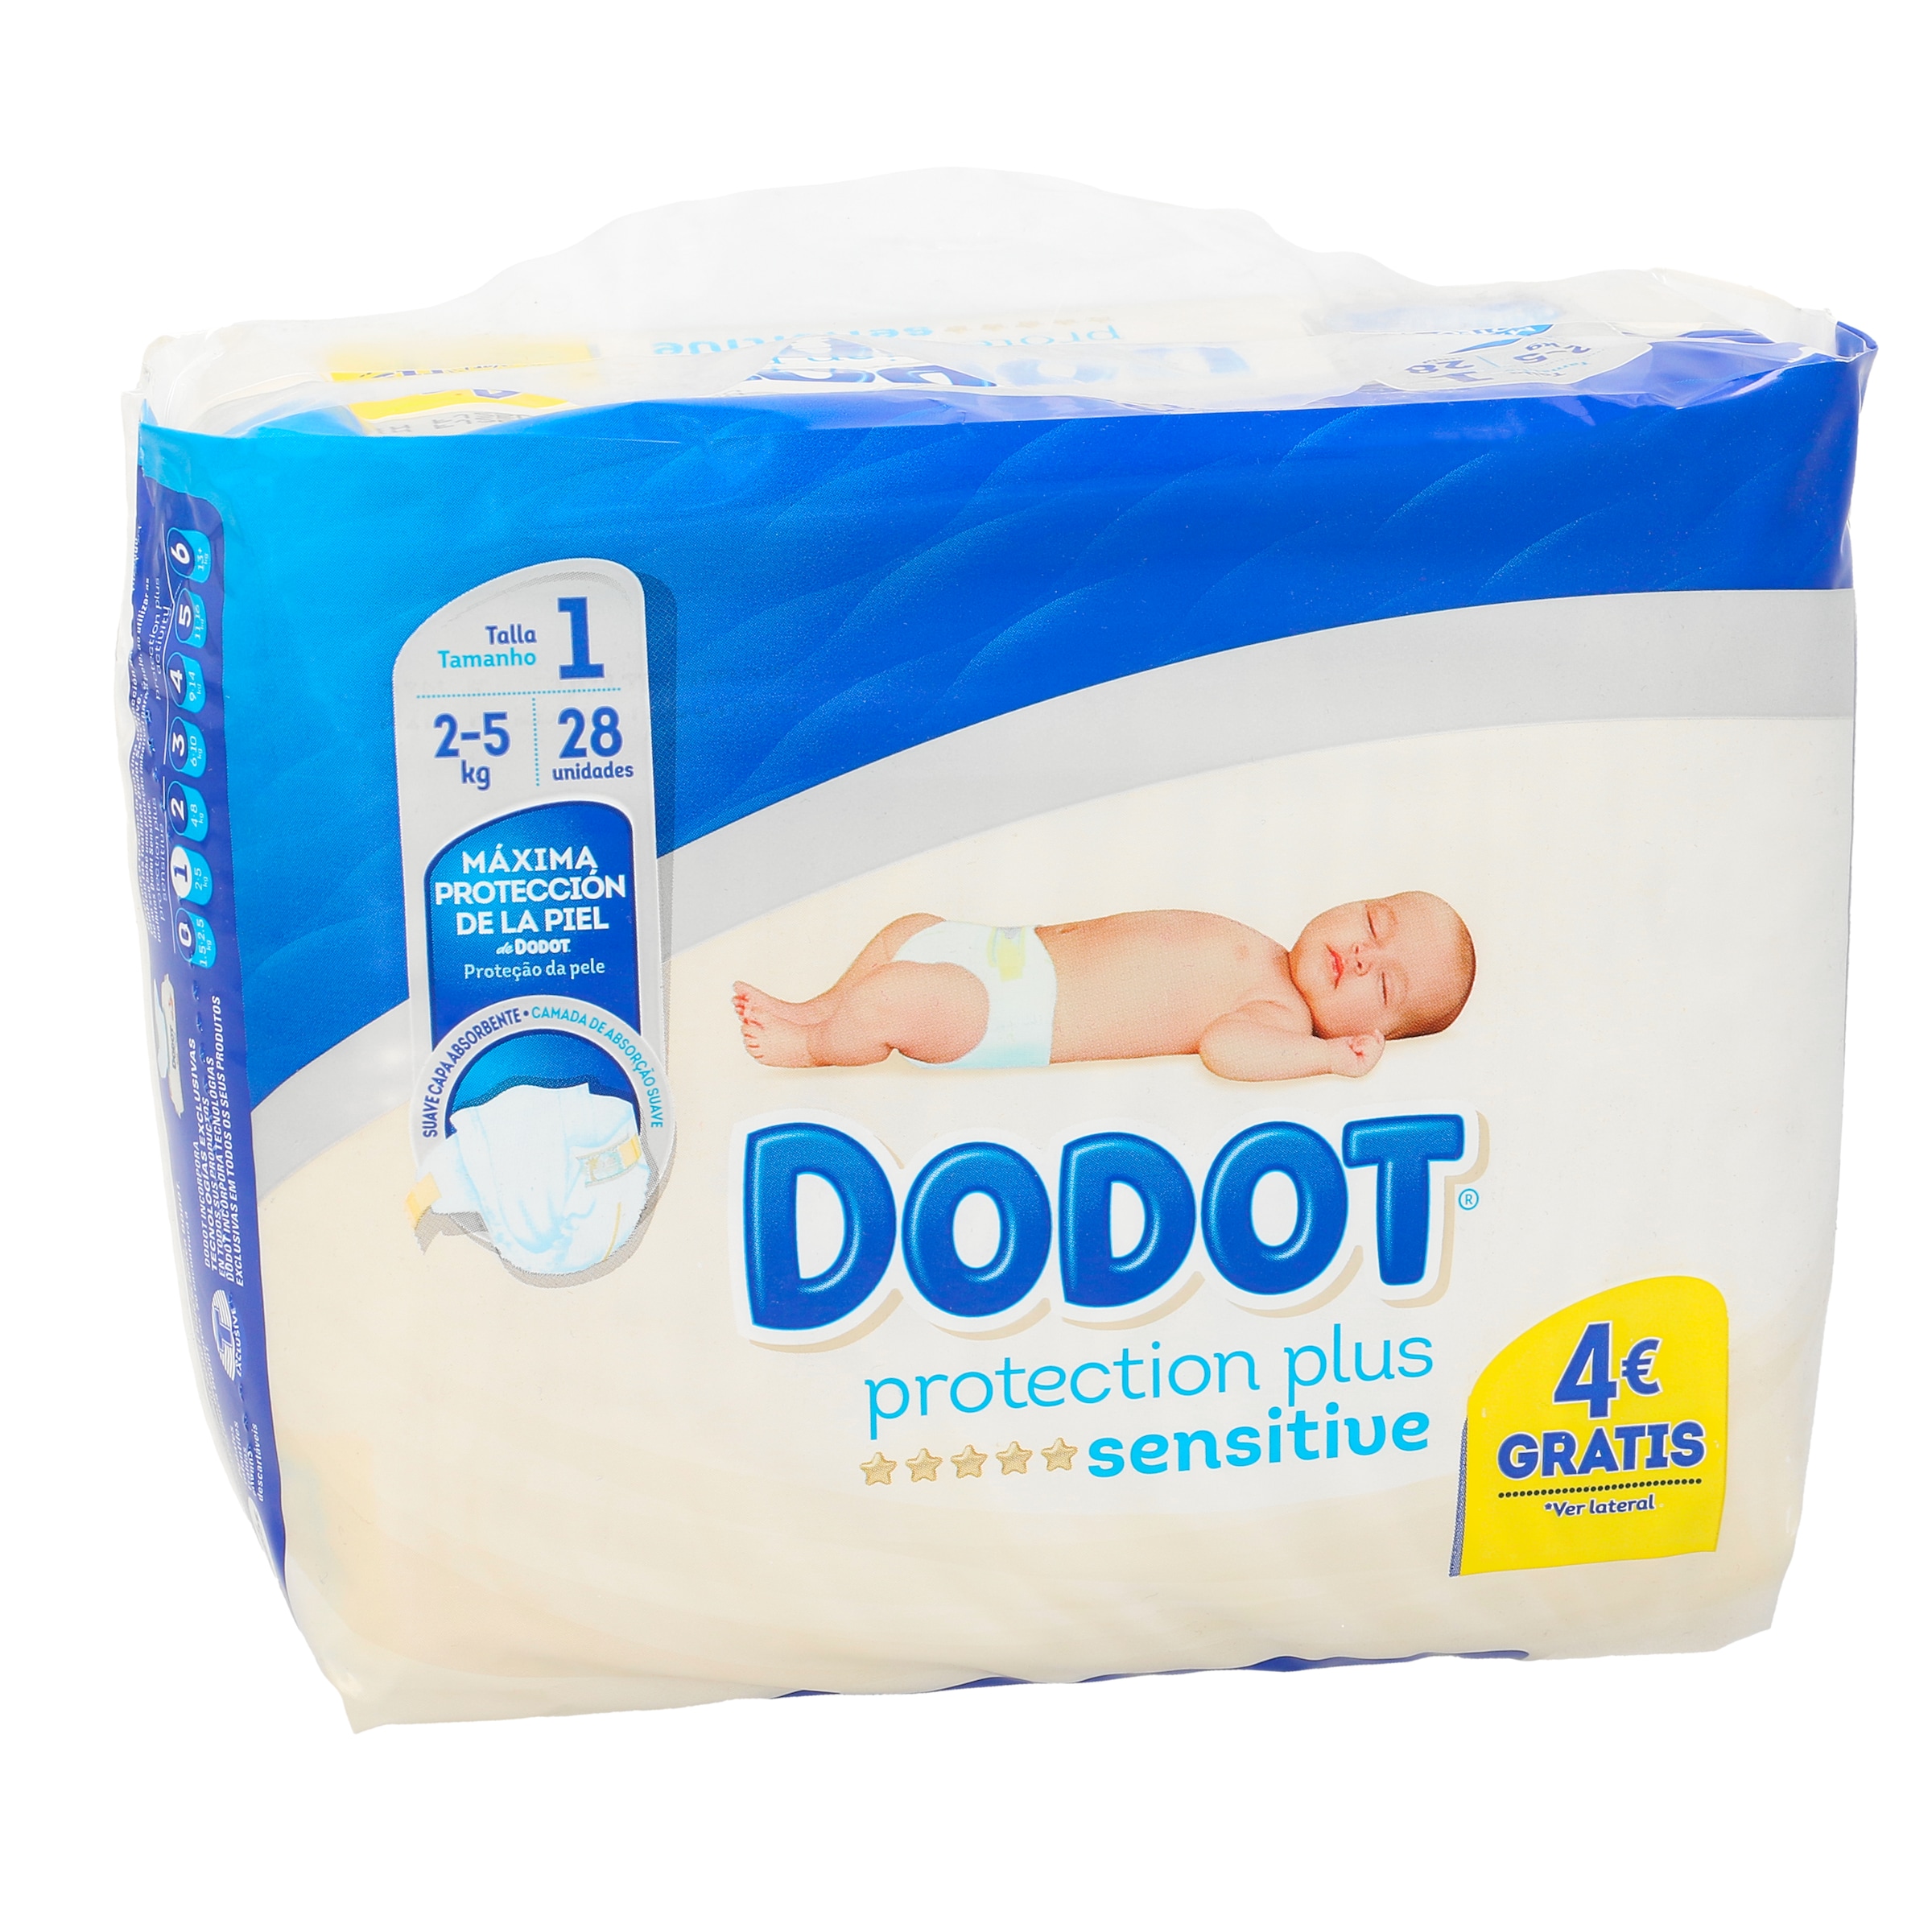 DODOT Sensitive pañales recién nacido 2-5 kg talla 1 paquete 28